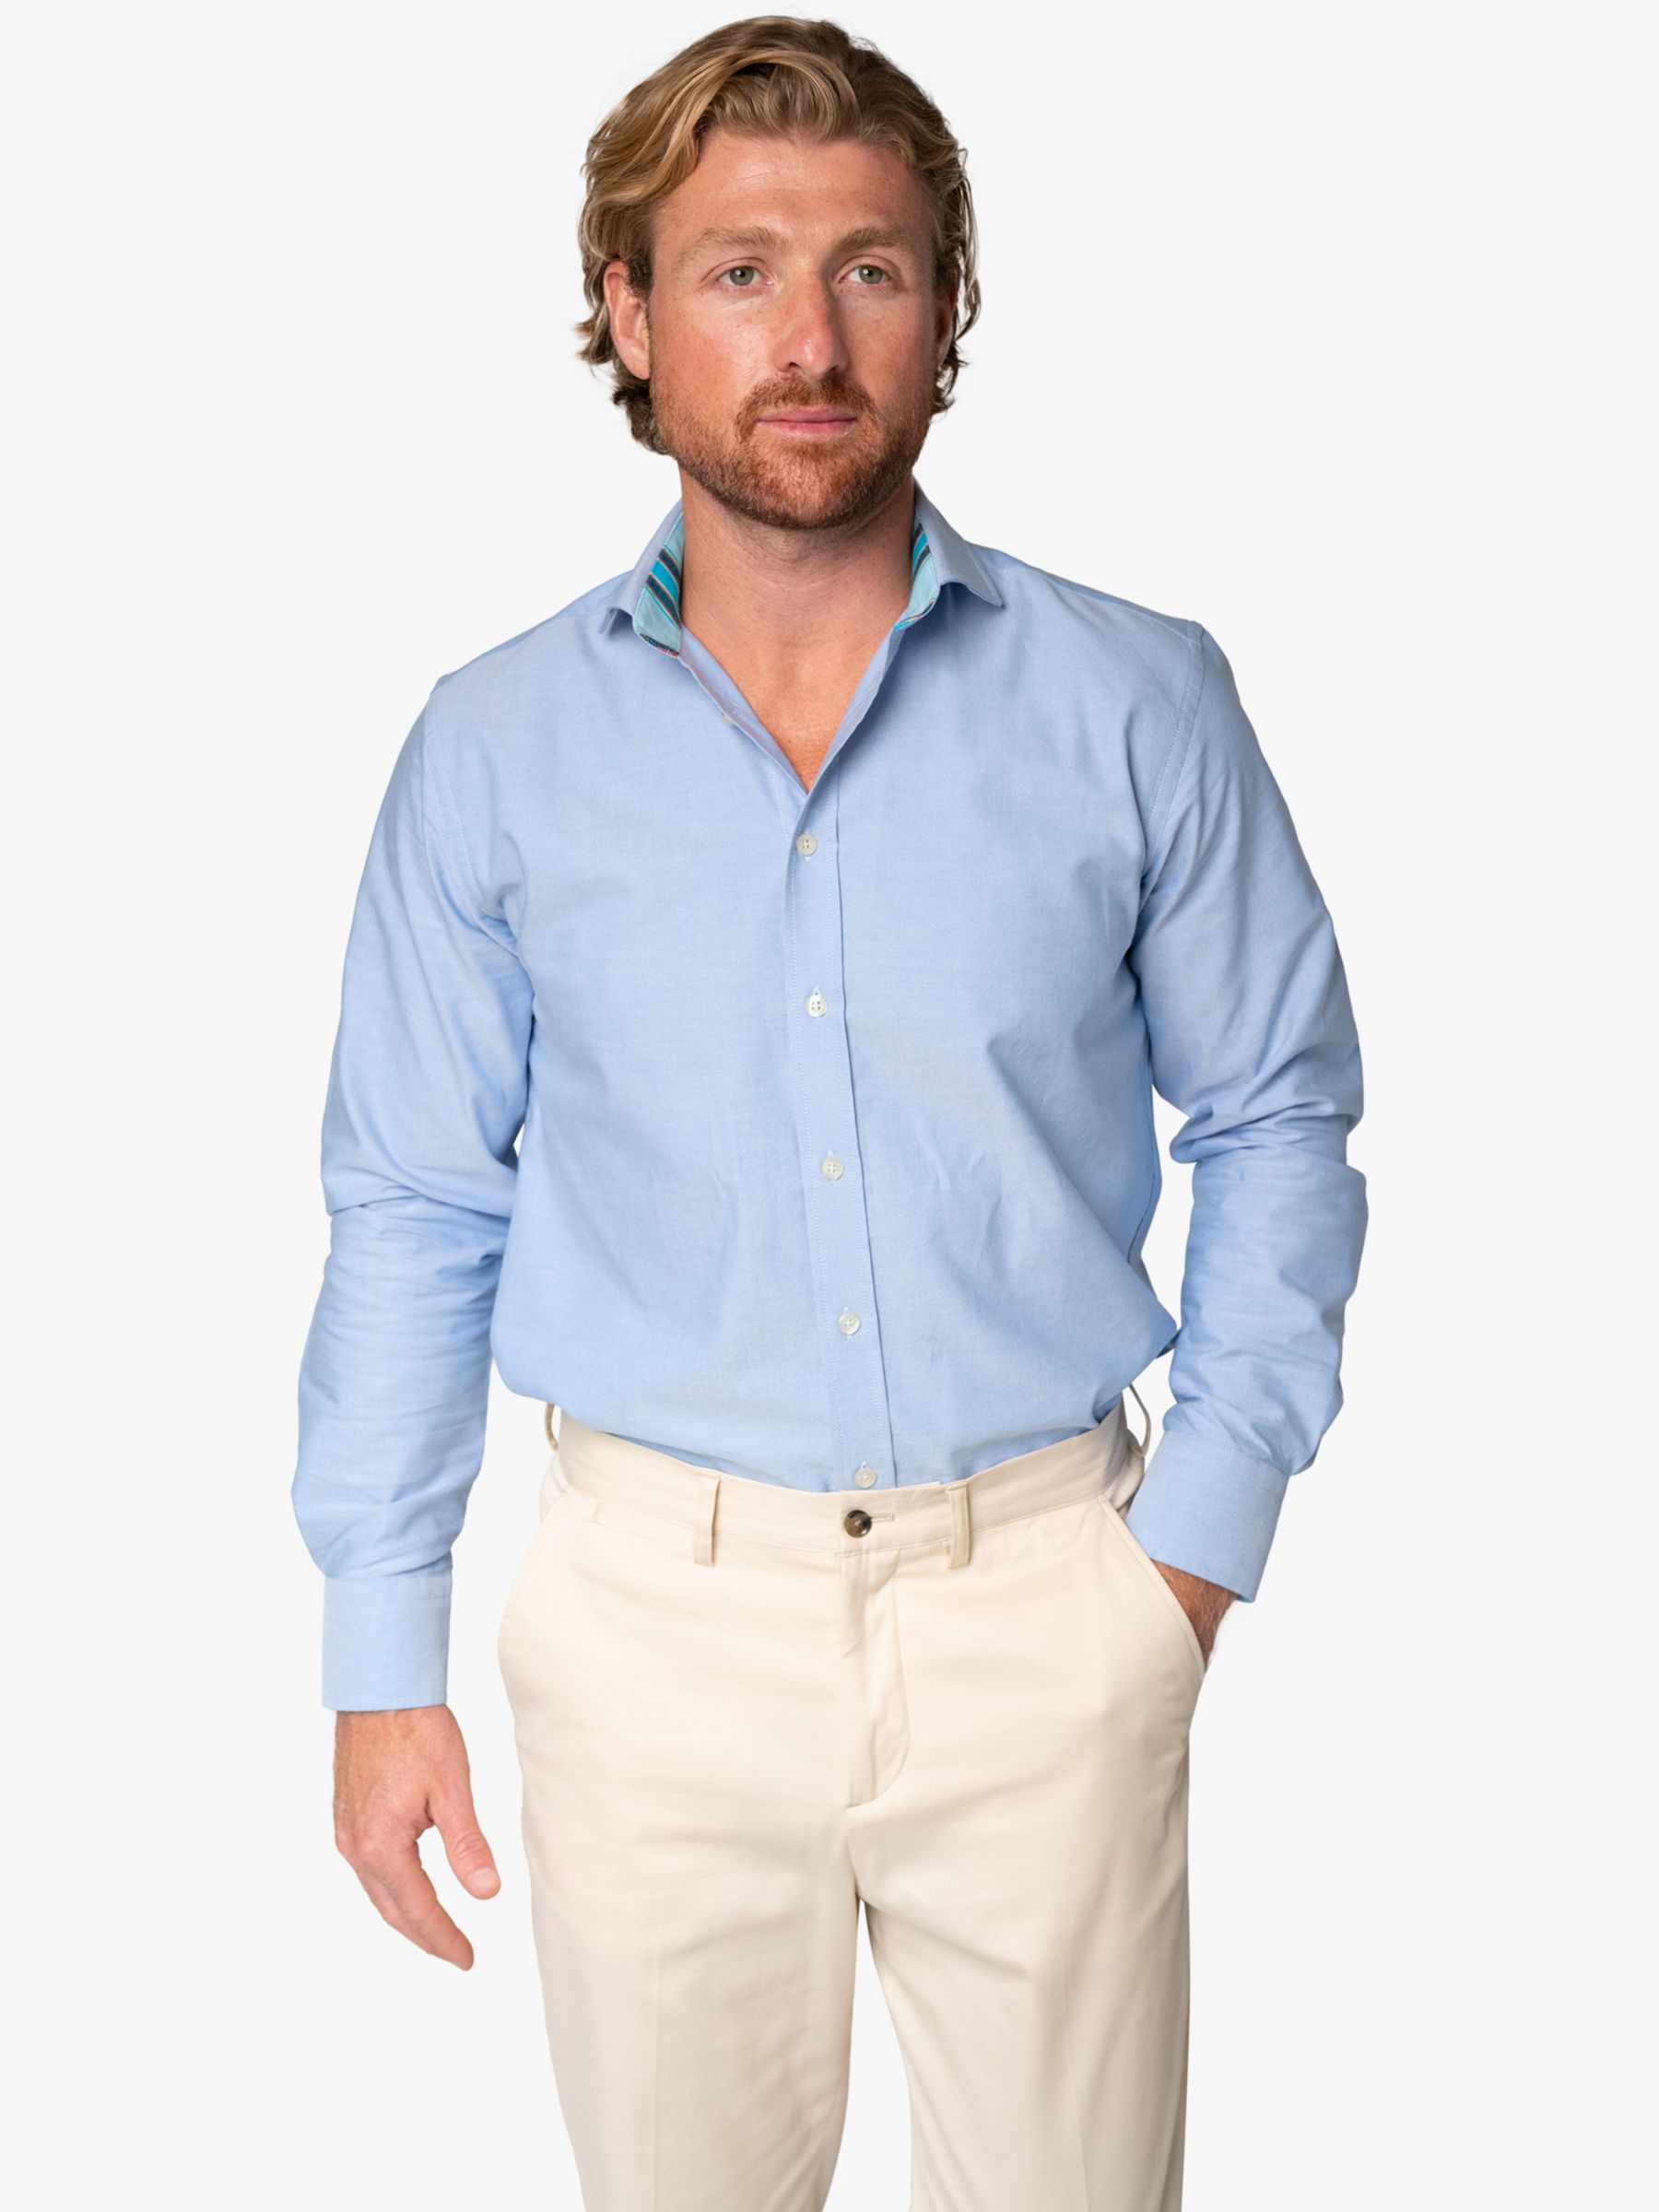 KOY Oxford Cotton Shirt, Blue Mid, S